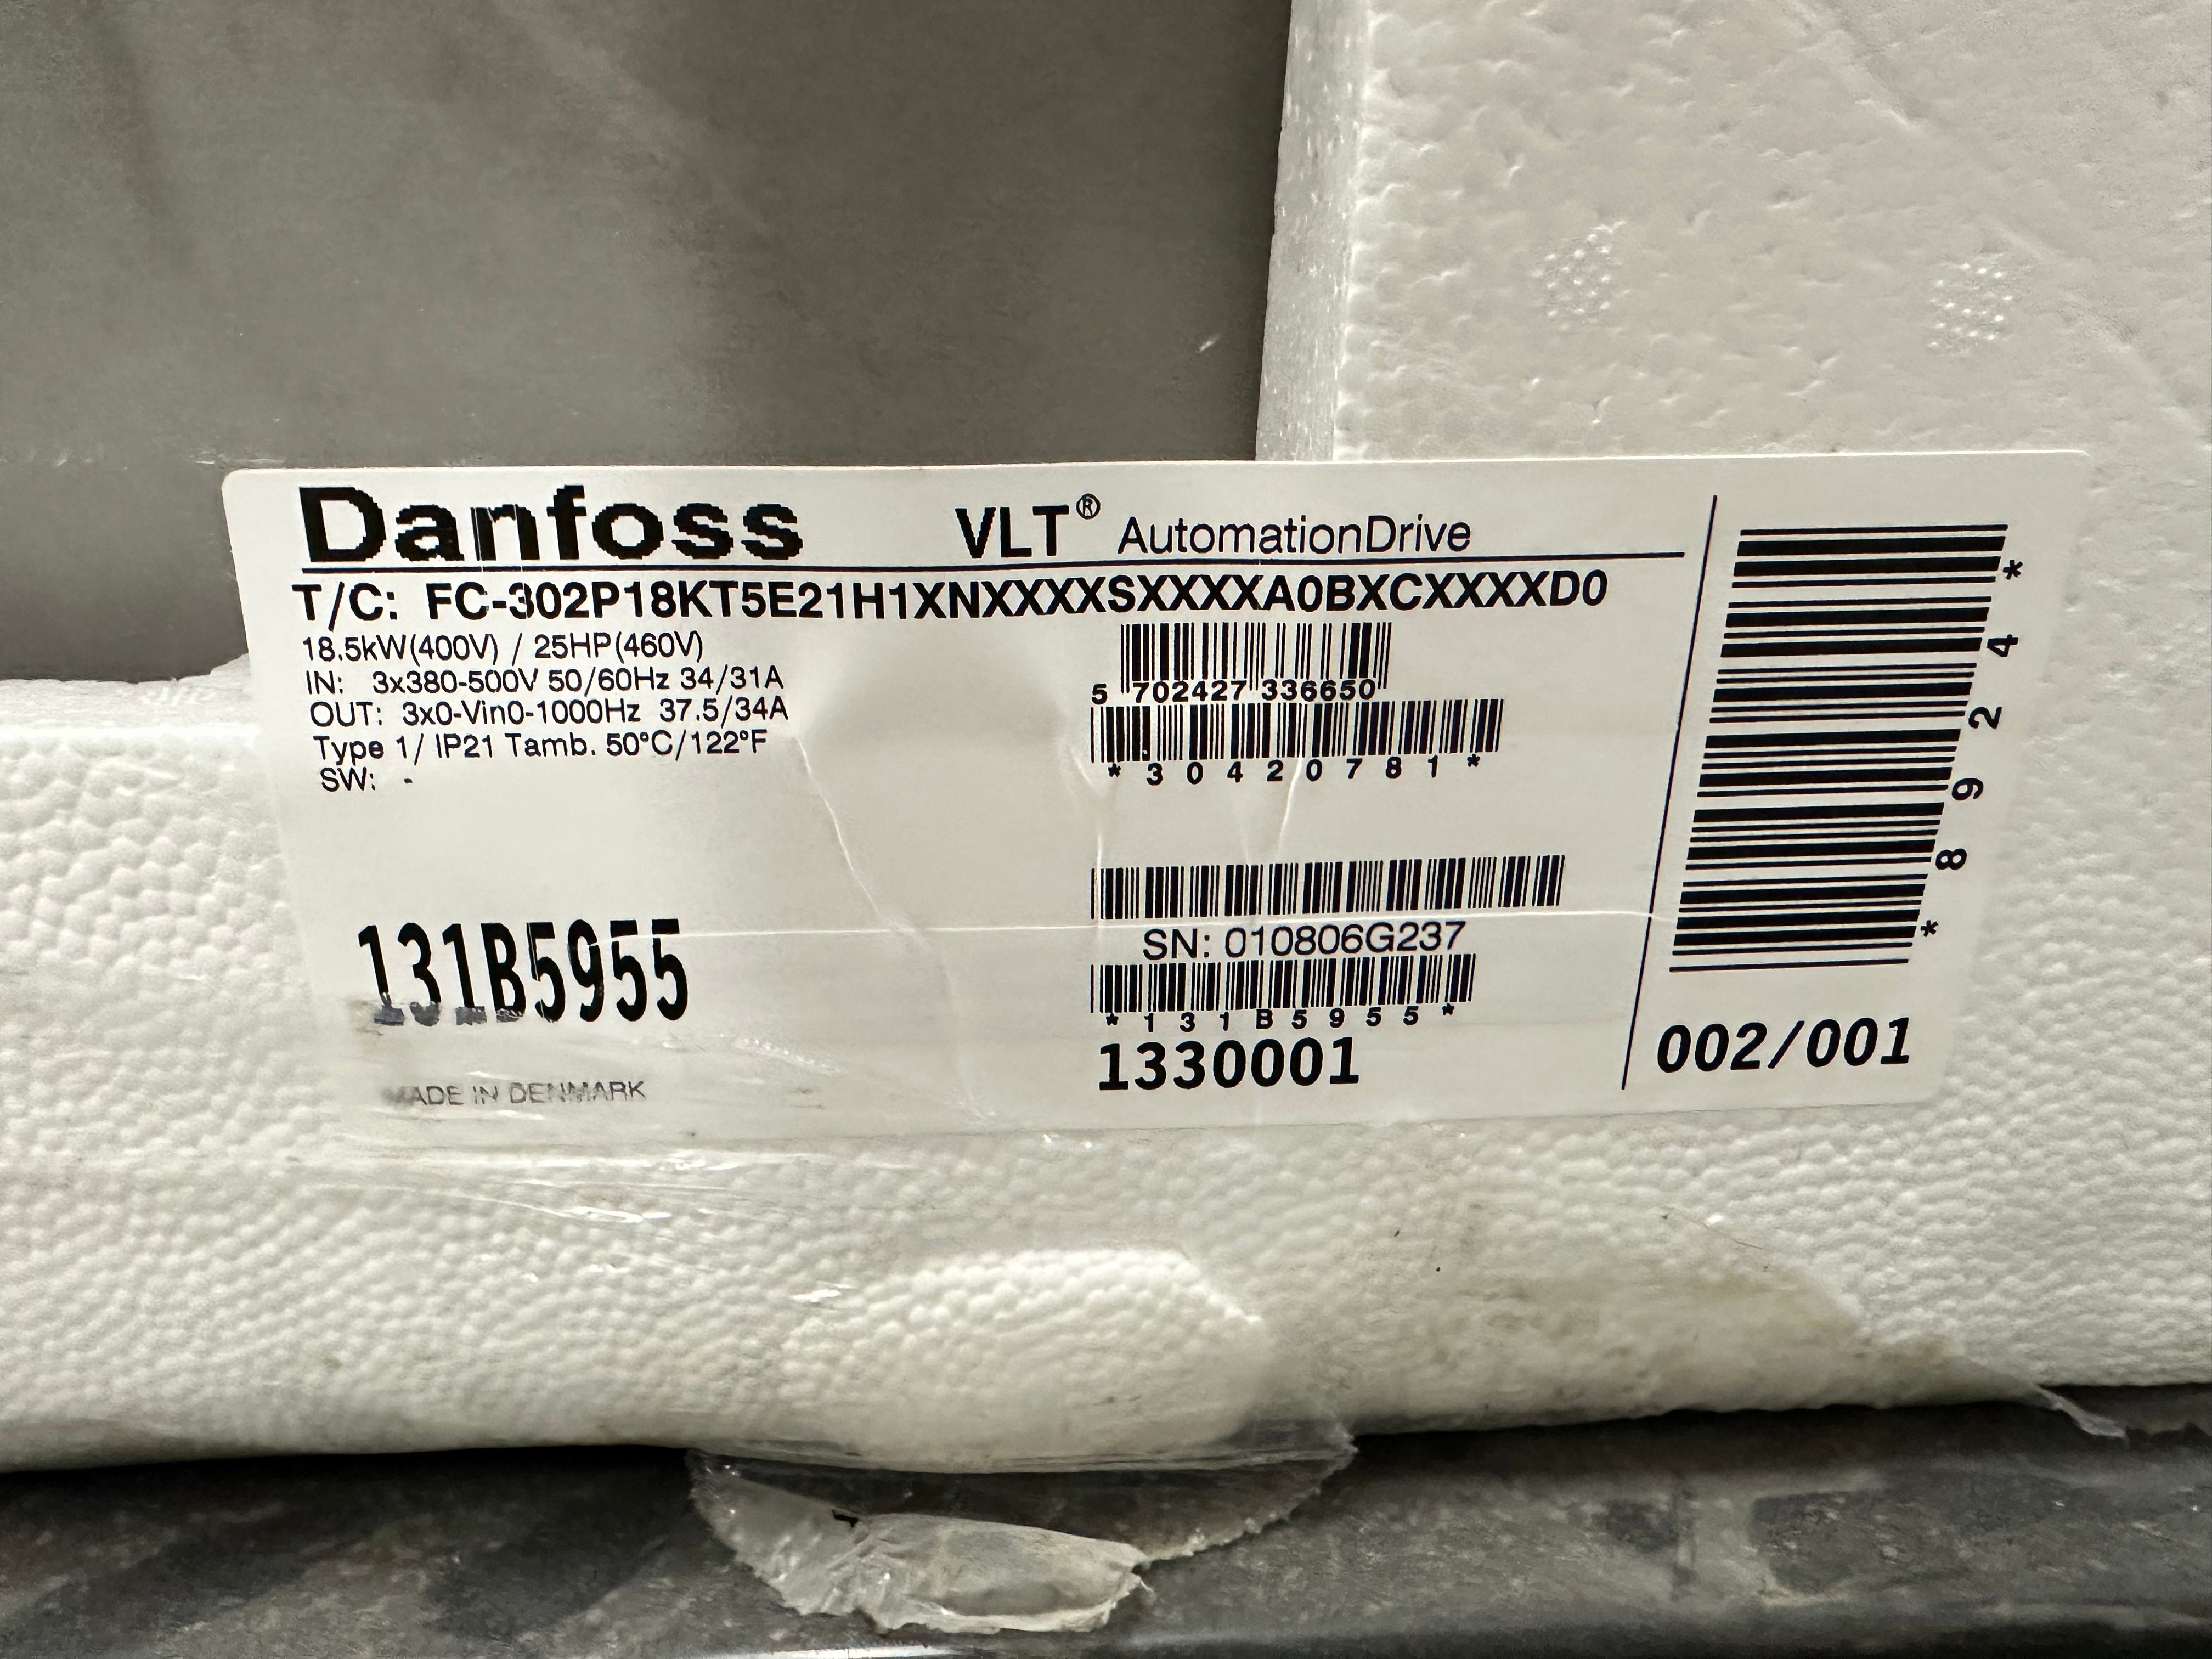 Danfoss frequency inverter VLT® AutomationDrive FC-302